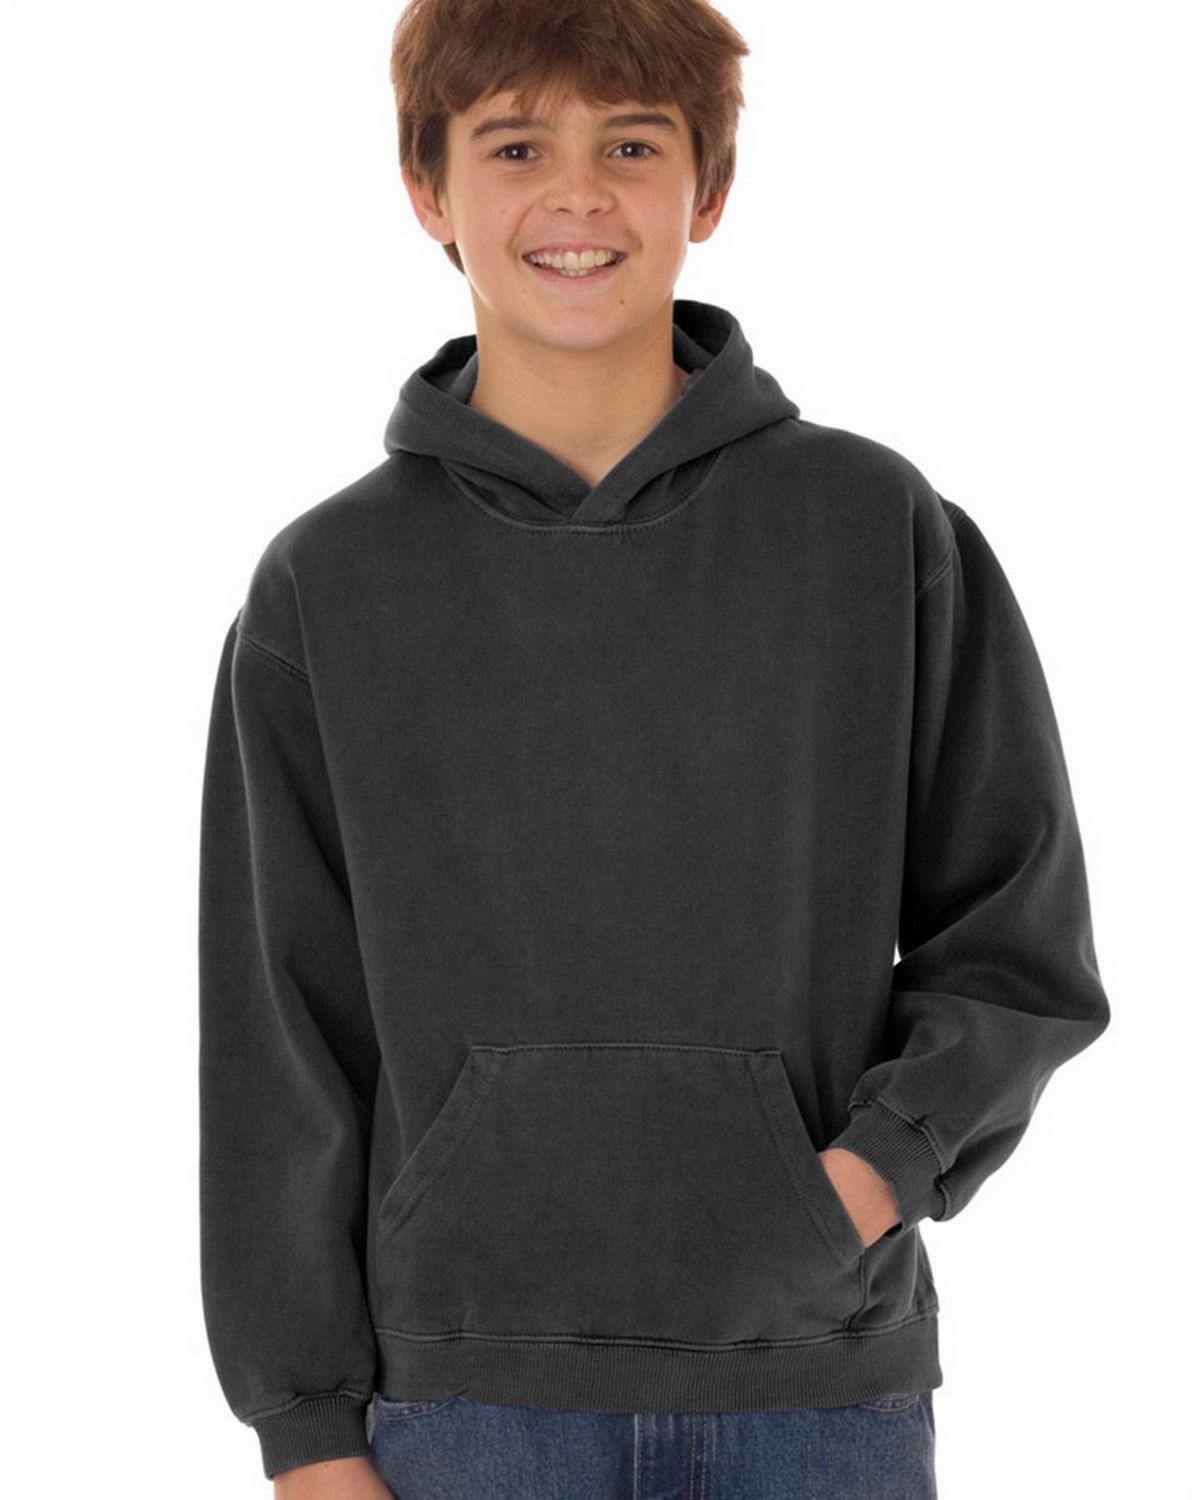 Chouinard 8755 Youth Hooded Sweatshirt - ApparelnBags.com